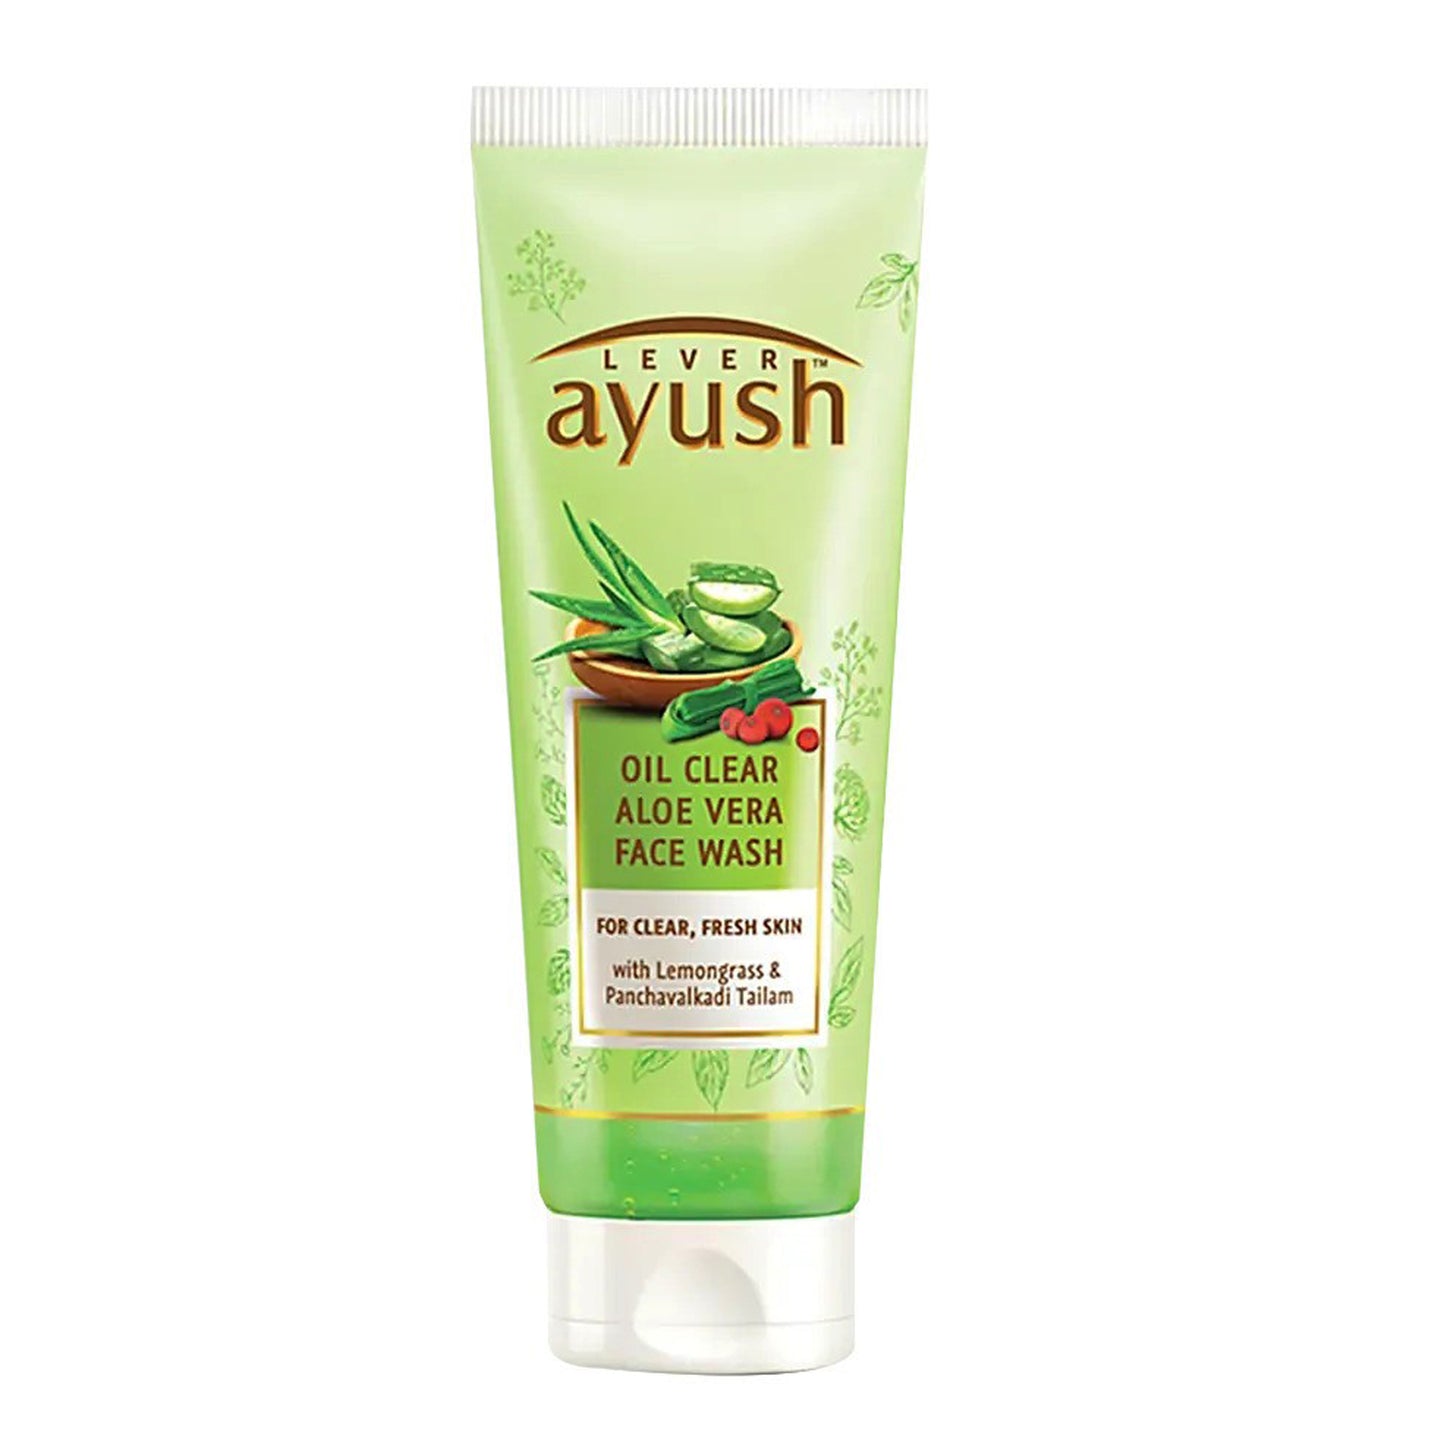 Ayush naturlig ayurvedisk olie klar Aloe Vera ansigtsvask (80 g)